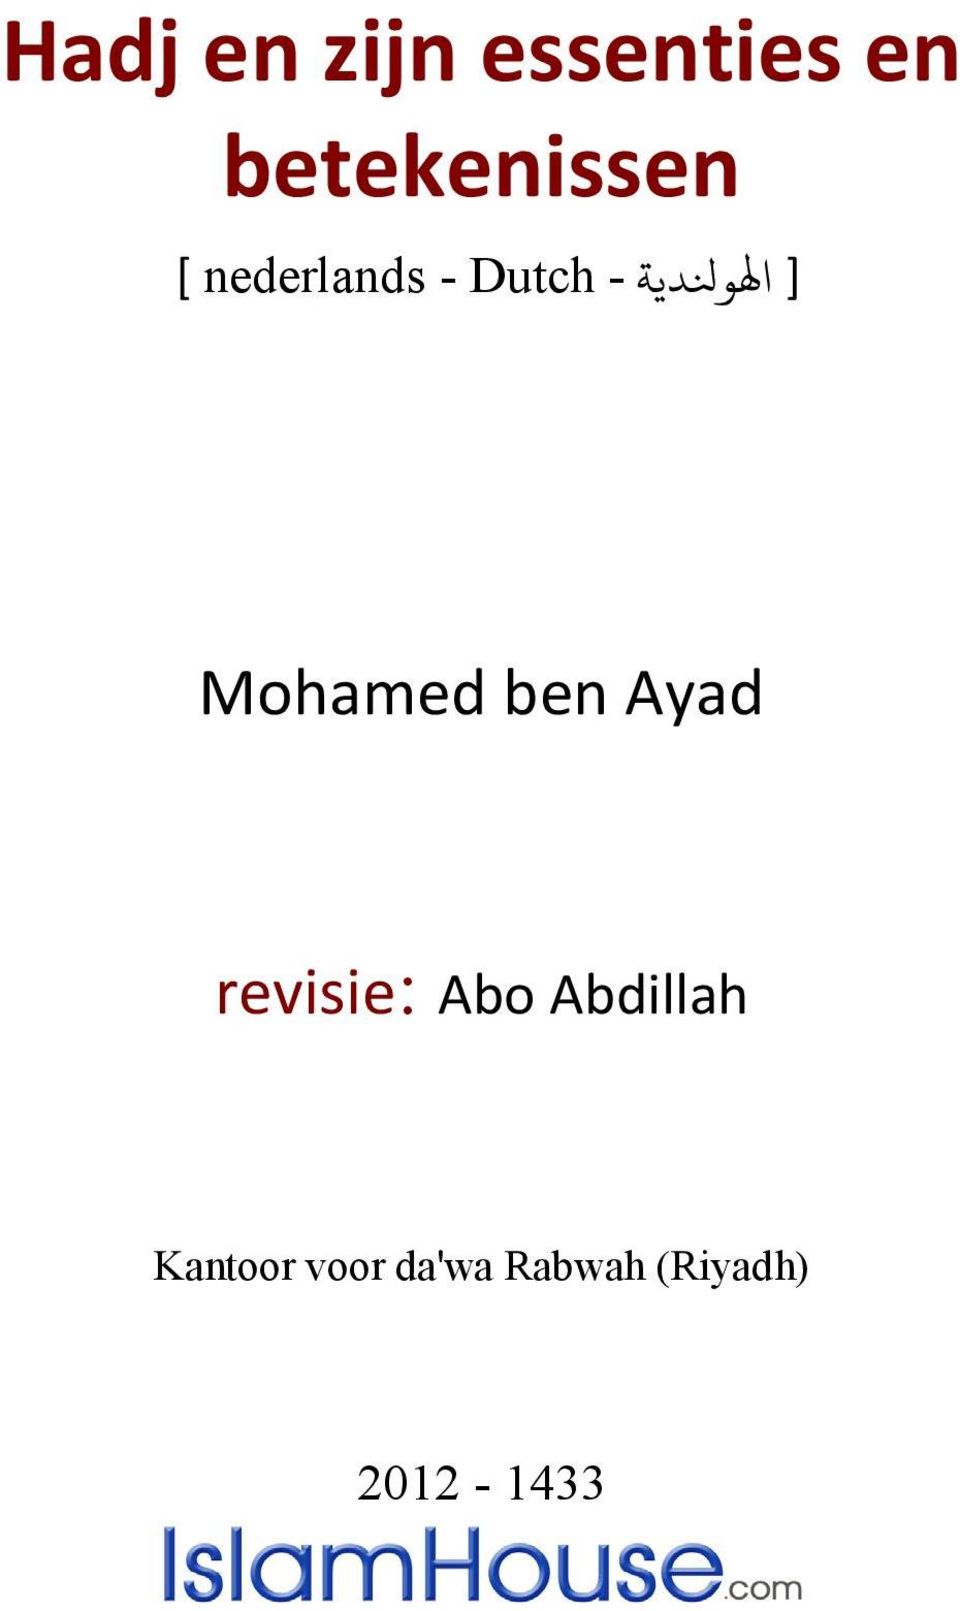 Mohamed ben Ayad revisie: Abo Abdillah